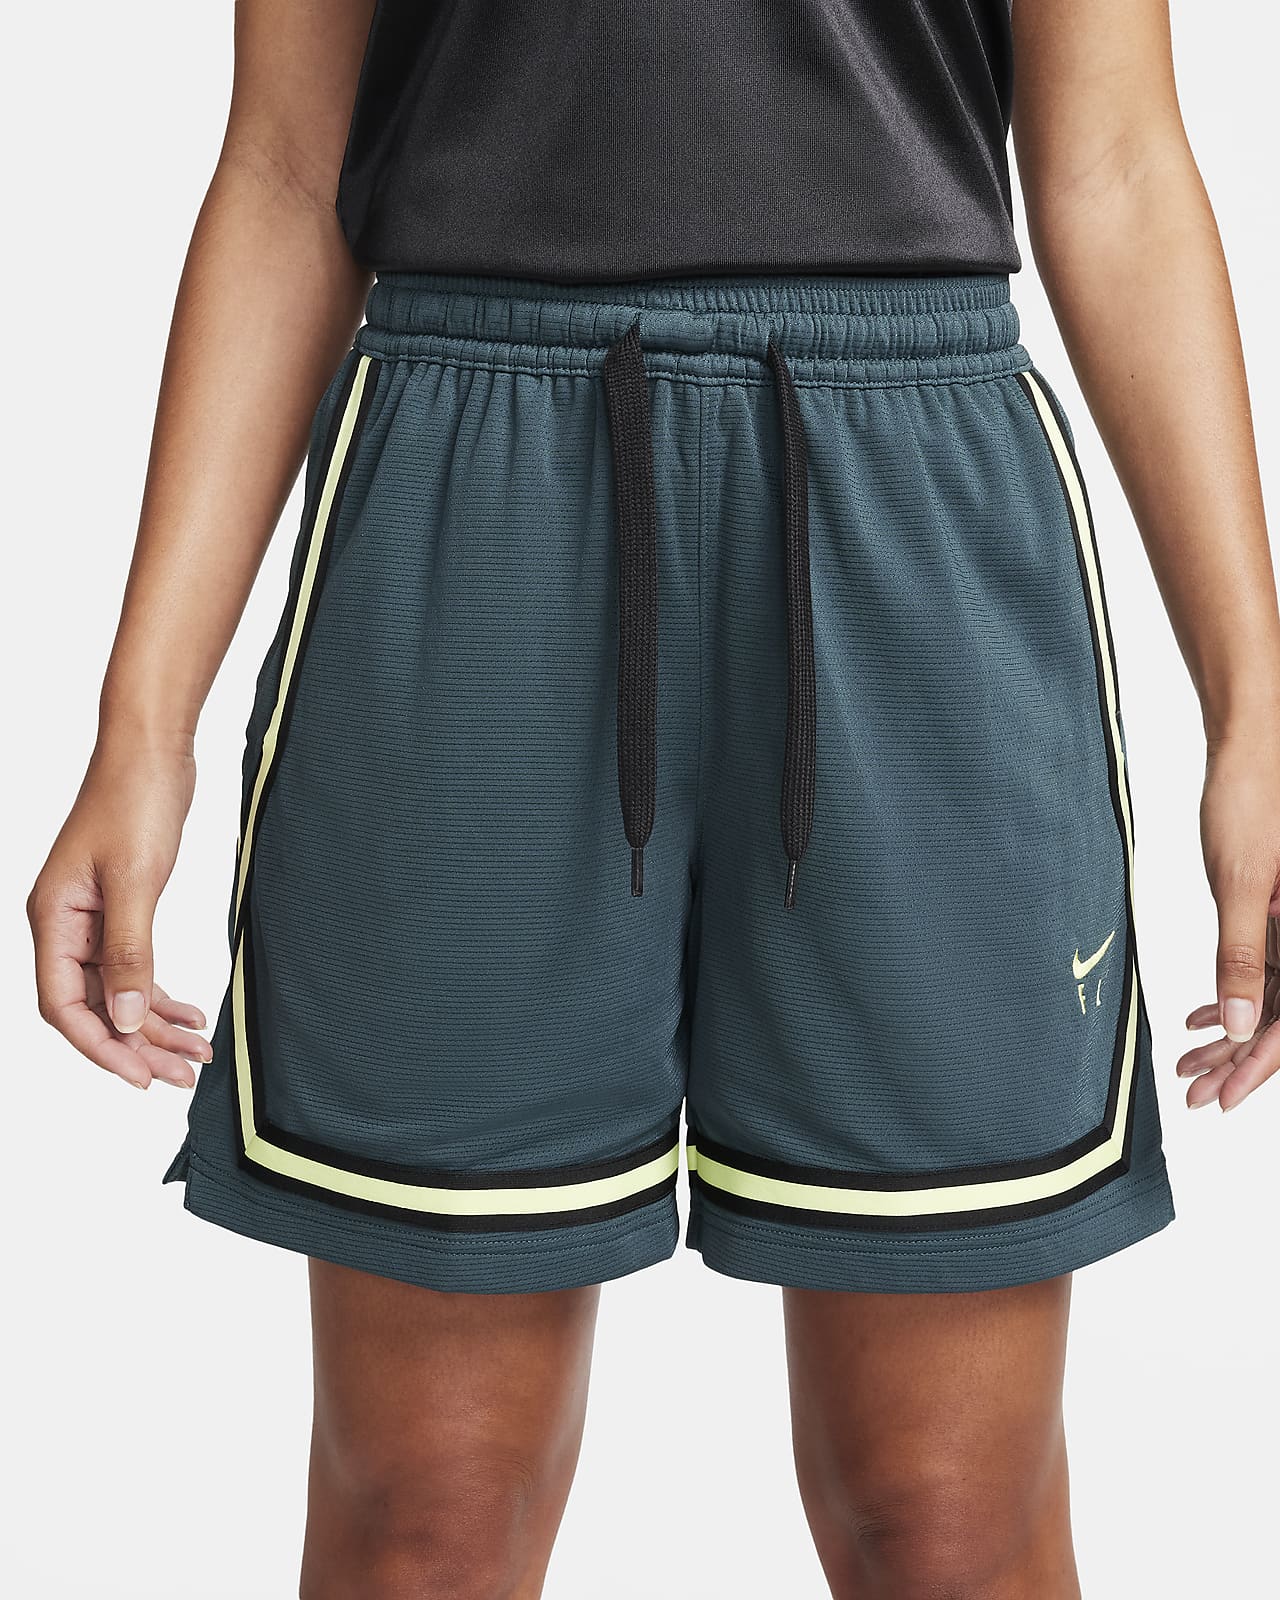 Womens Basketball Shorts.